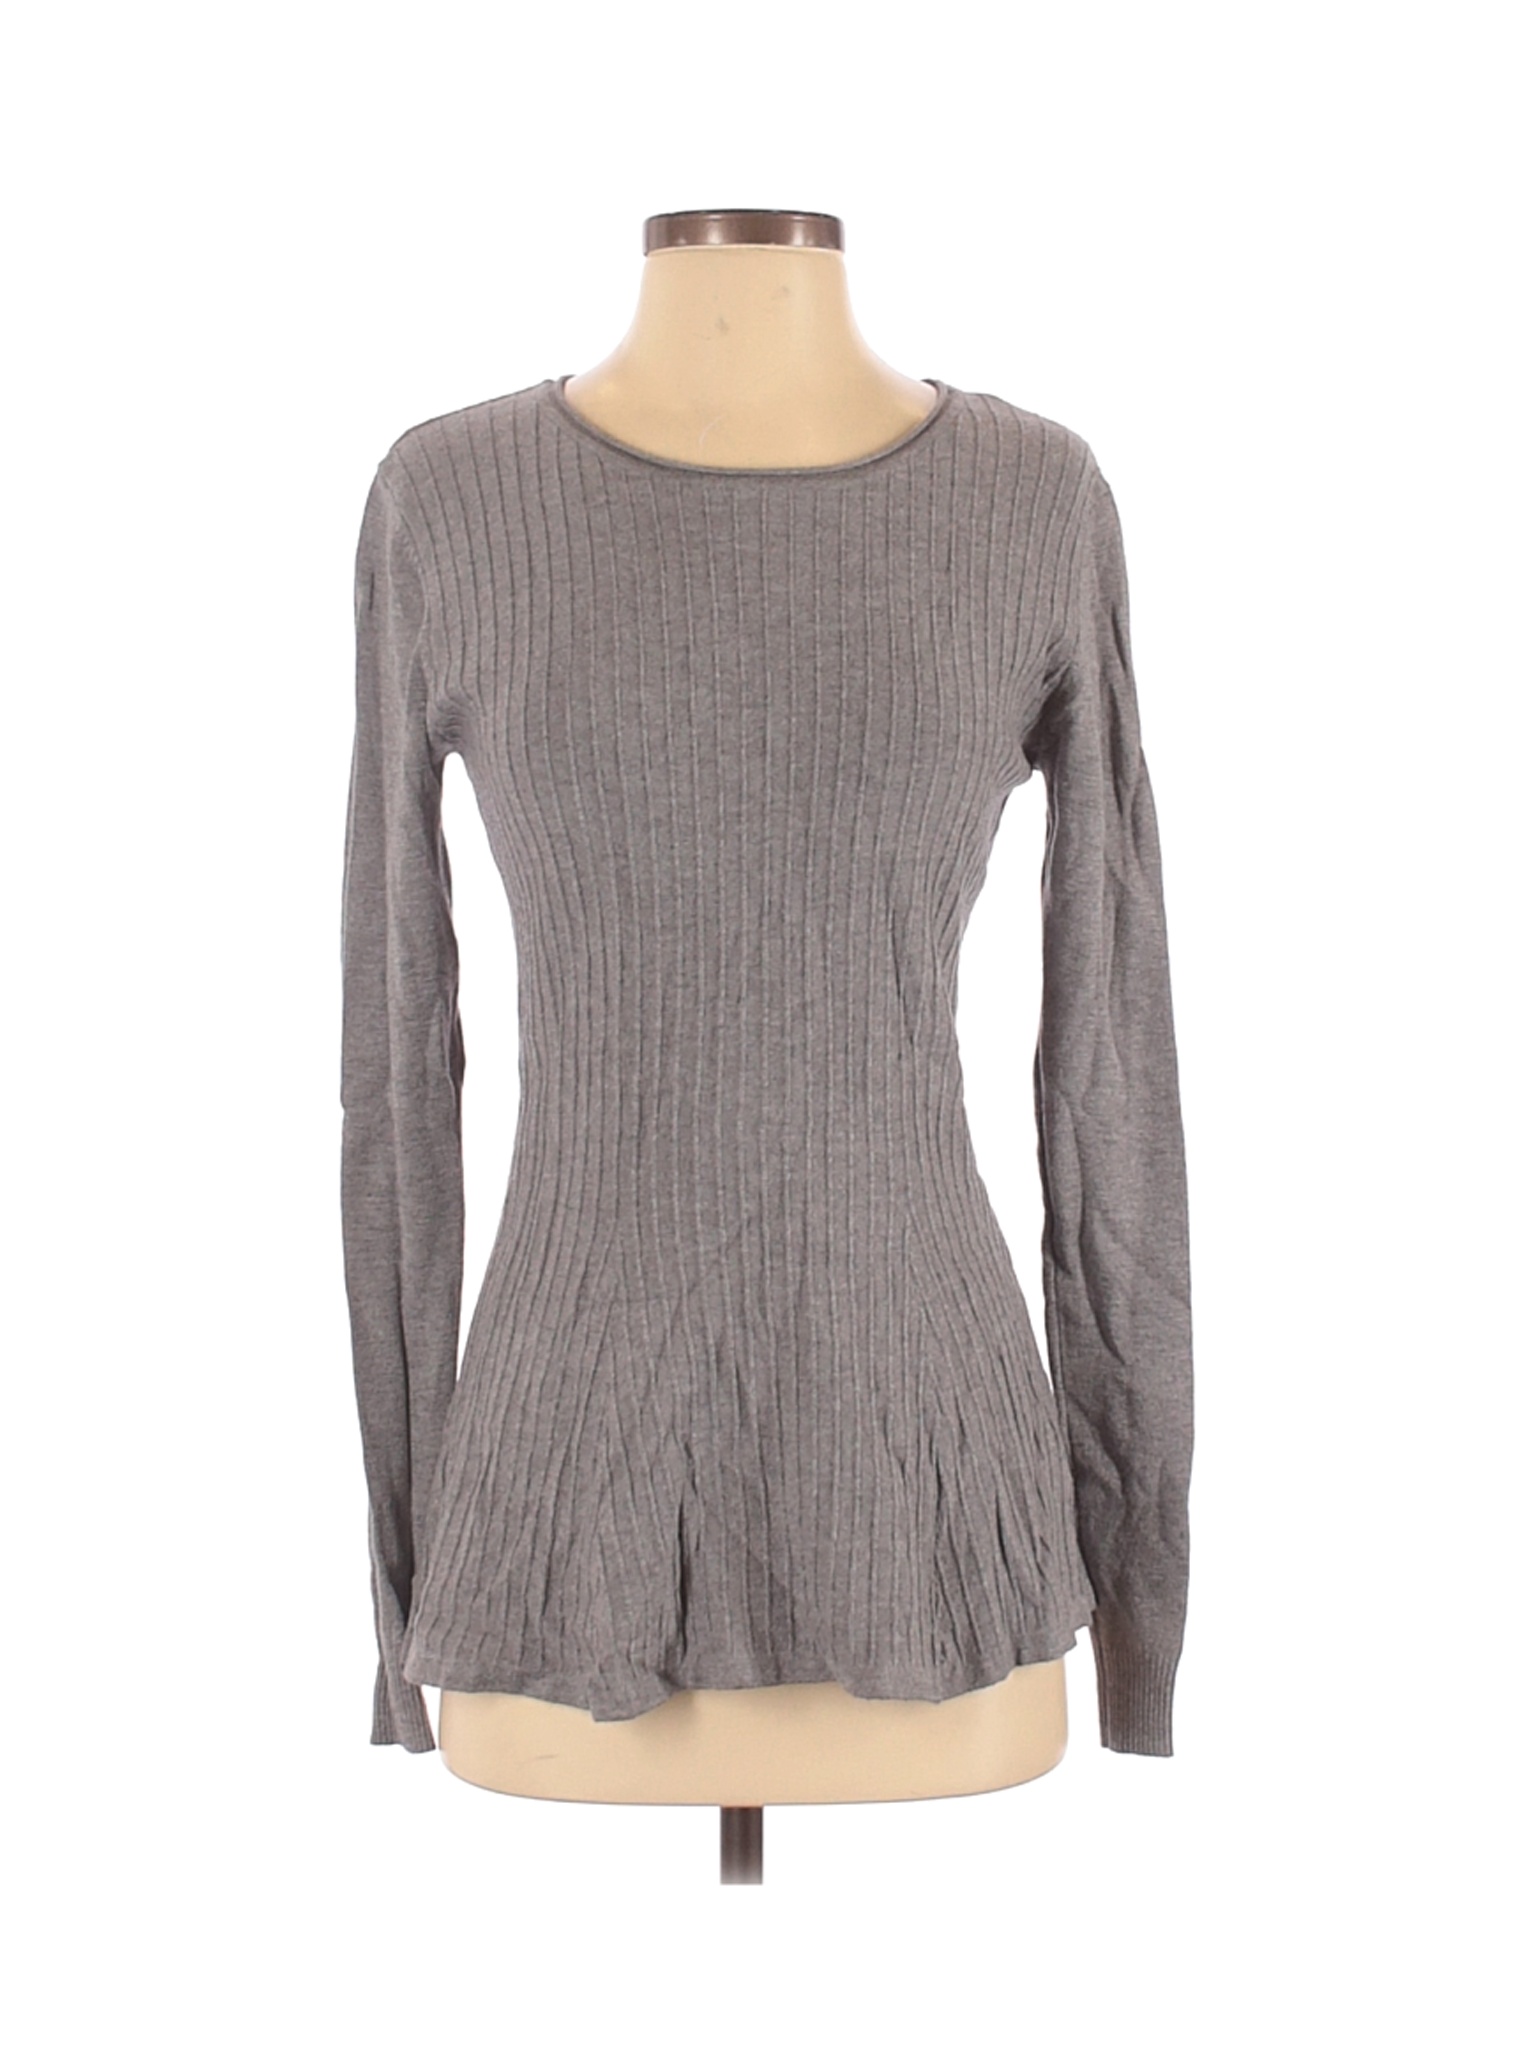 Villa Milano Women Gray Pullover Sweater S | eBay